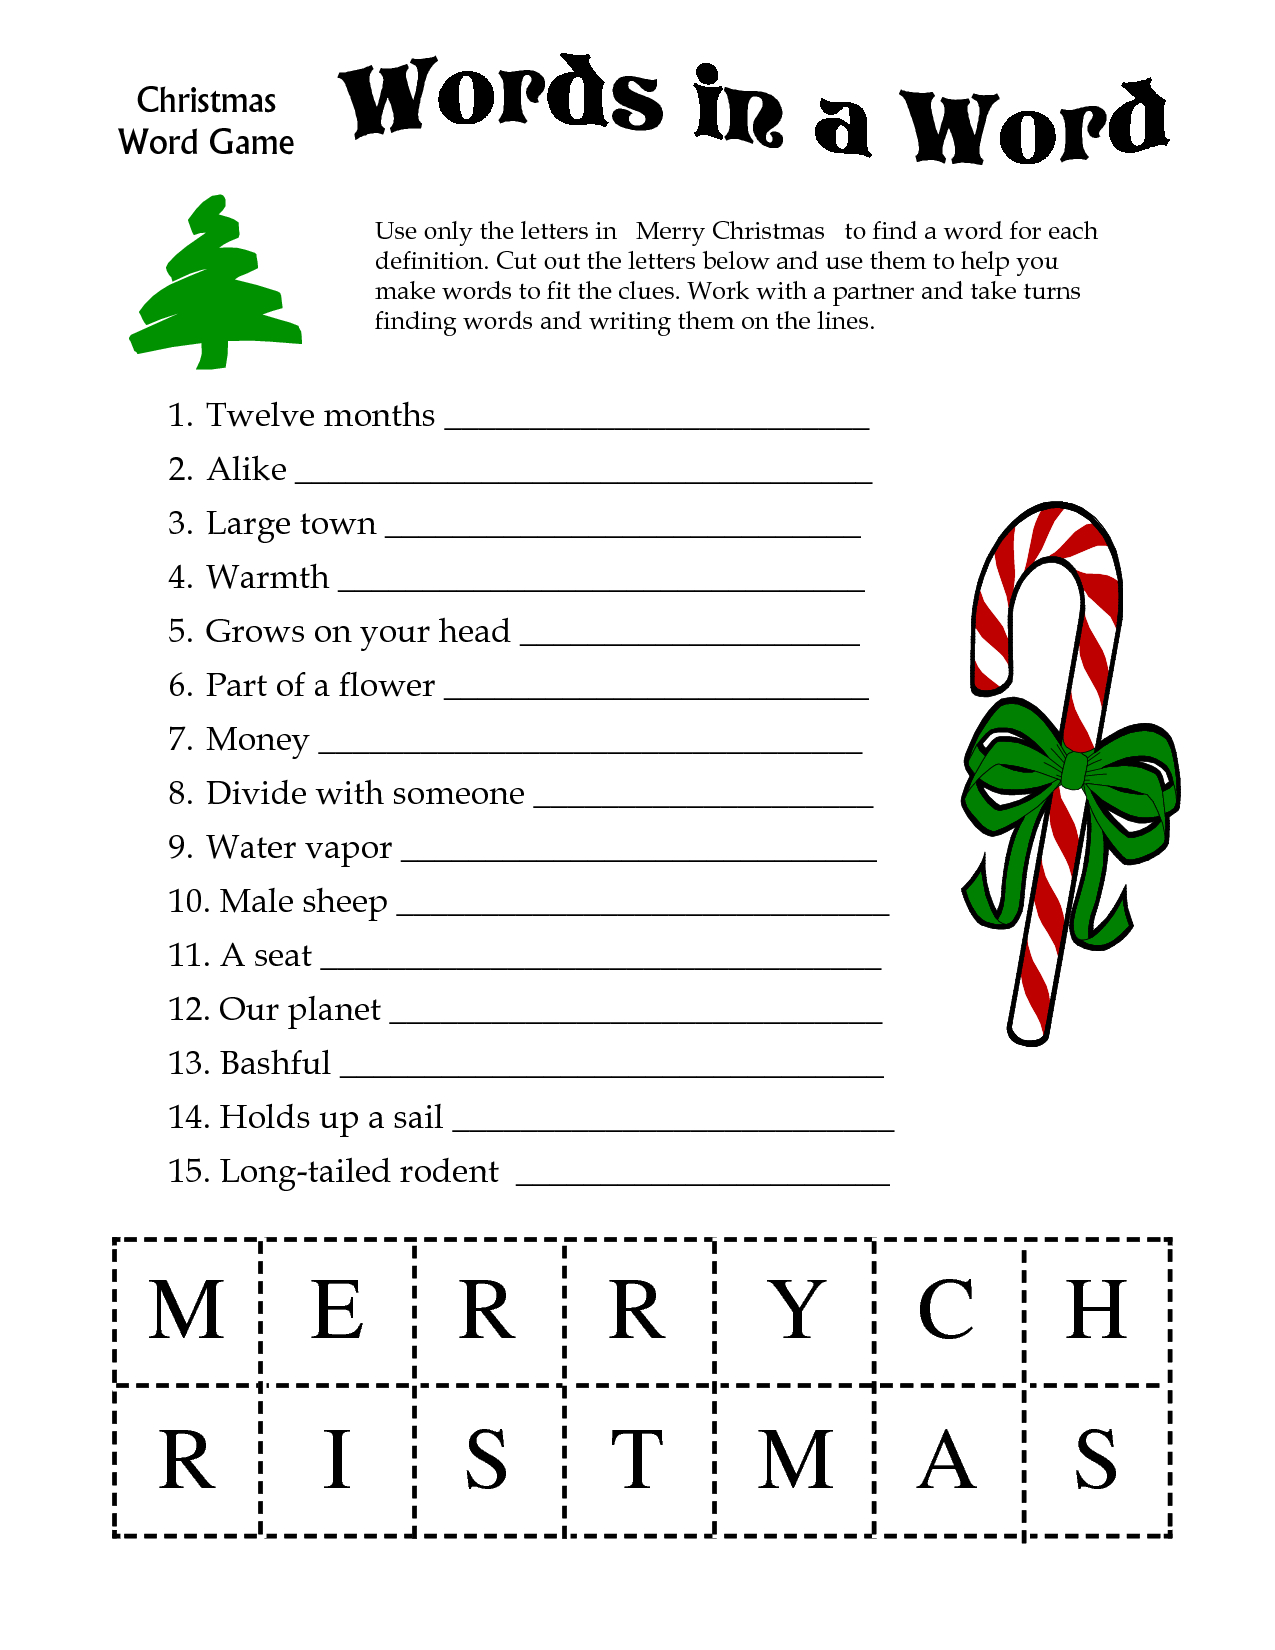 Free Printable Christmas Word Games Puzzles – Festival Collections - Christmas Printable Puzzles Games